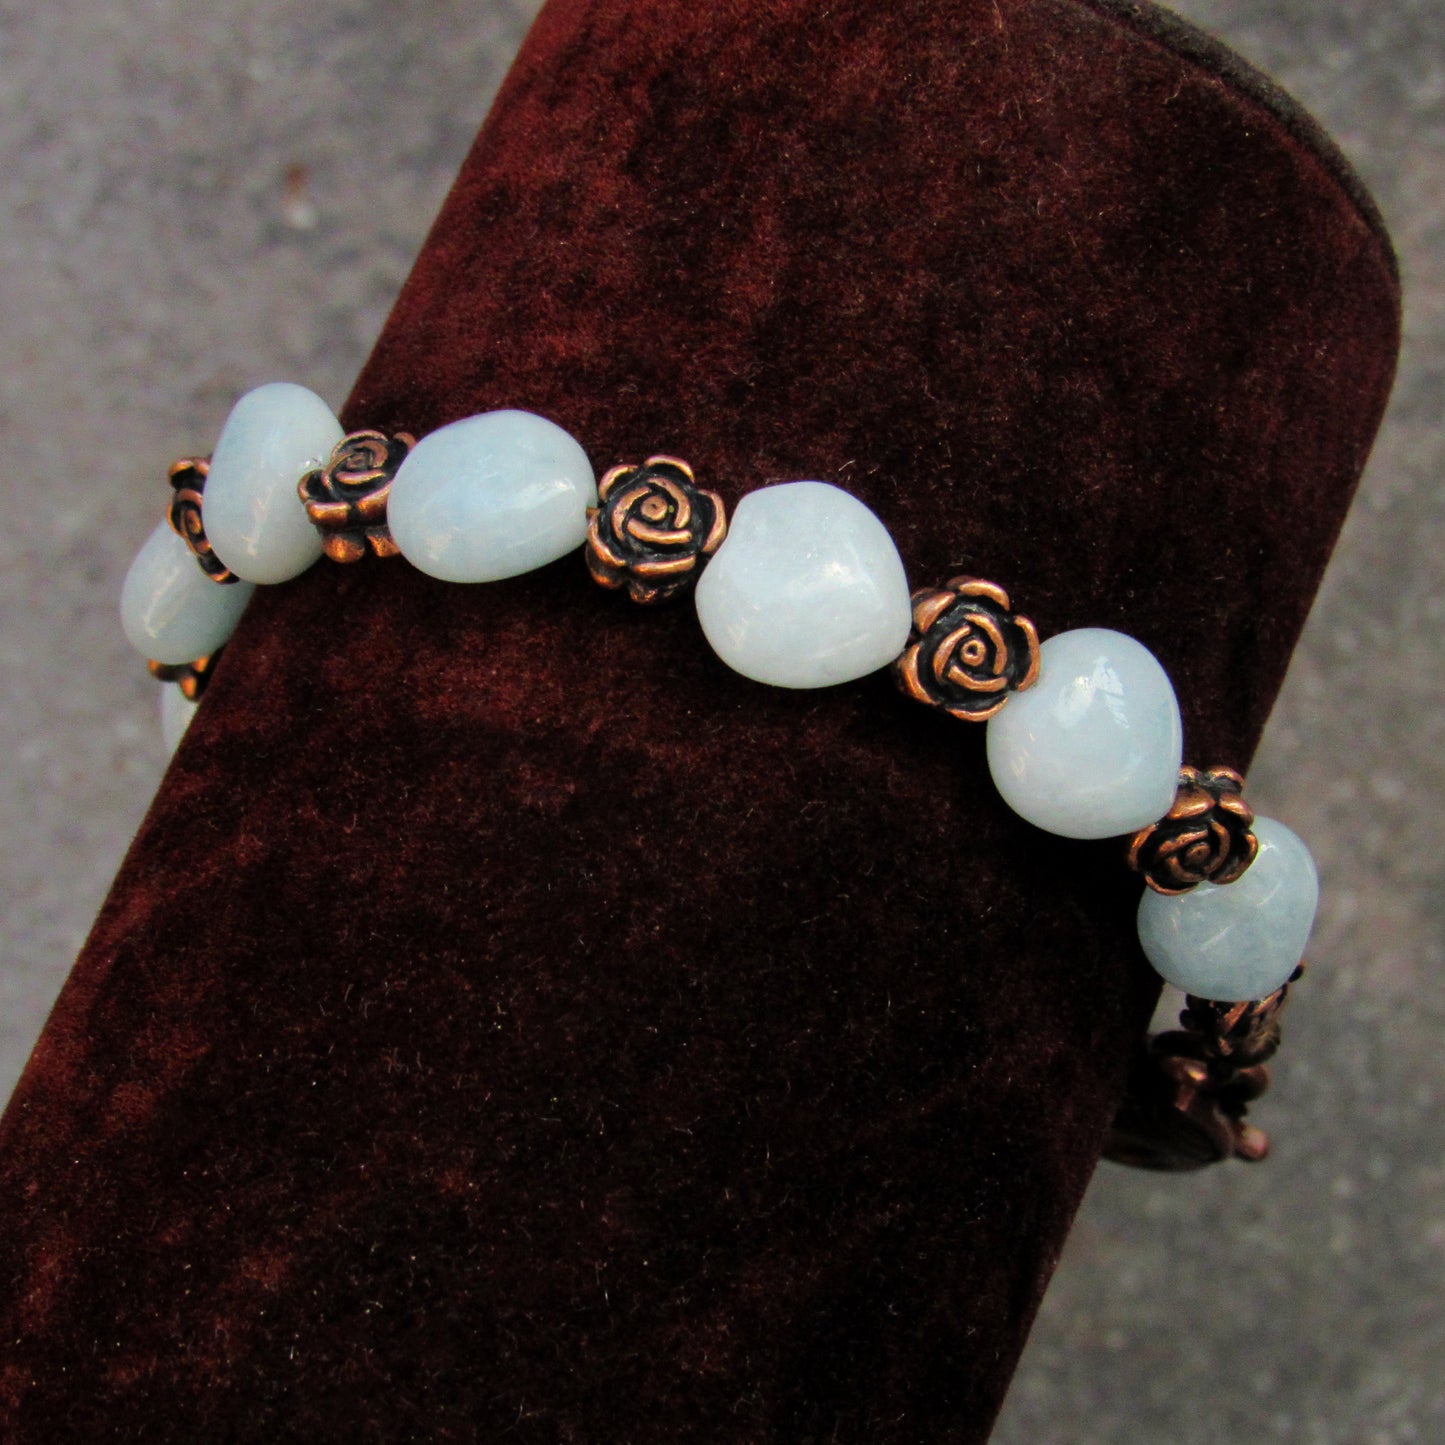 Aquamarine gemstone Heart and Copper Rose Stretch bracelet